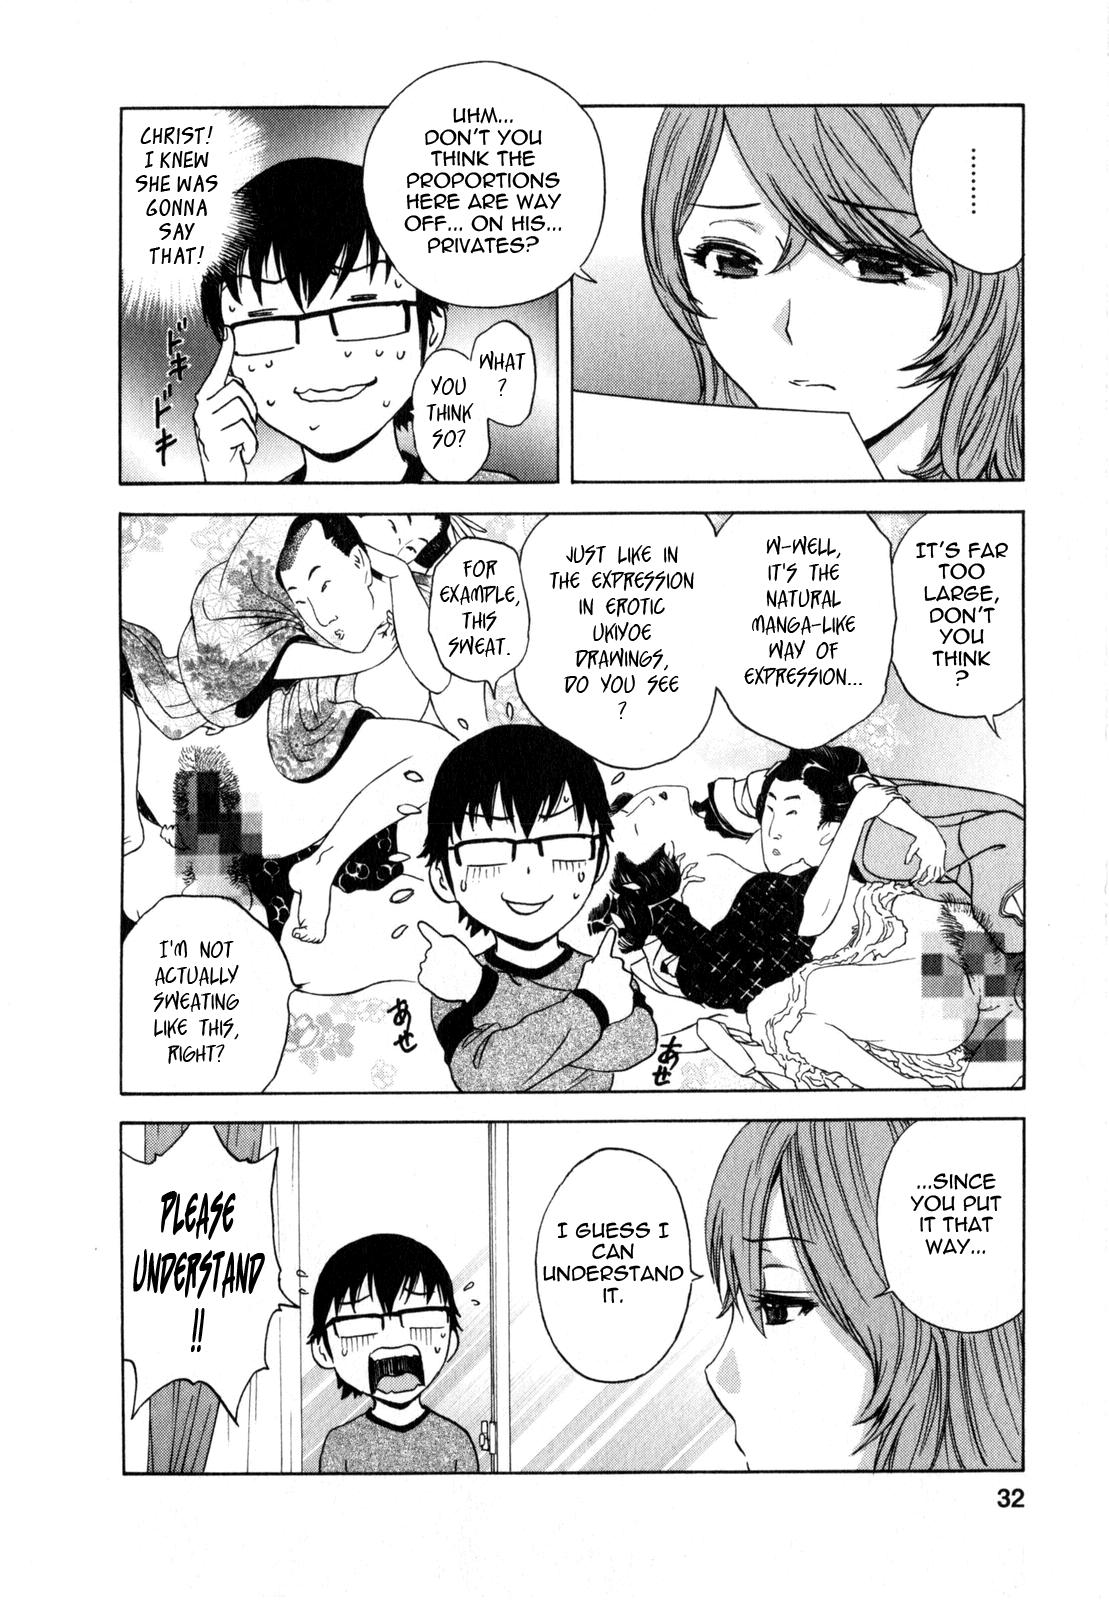 [Hidemaru] Life with Married Women Just Like a Manga 2 - Ch. 1-5 [English] {Tadanohito} 32